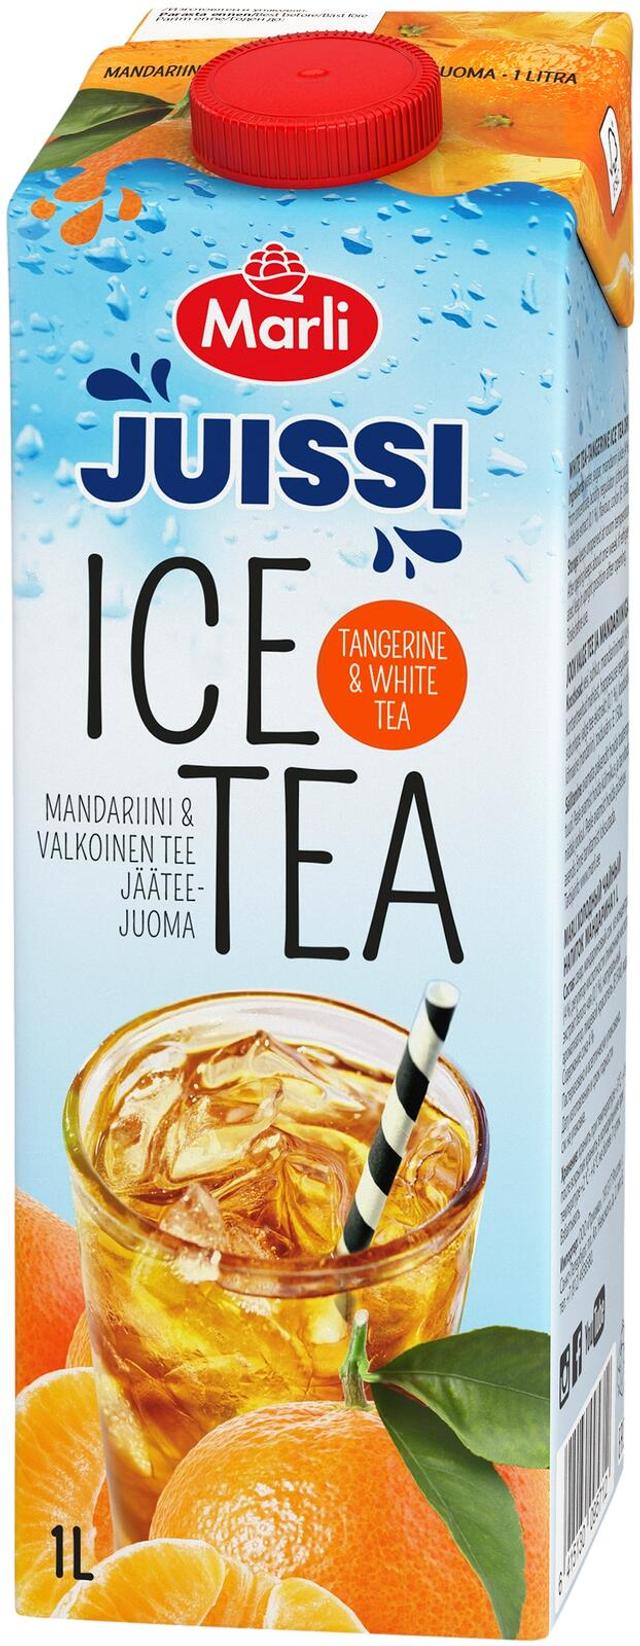 Marli Juissi Ice Tea Valkoinen tee-mandariini jääteejuoma 1 L